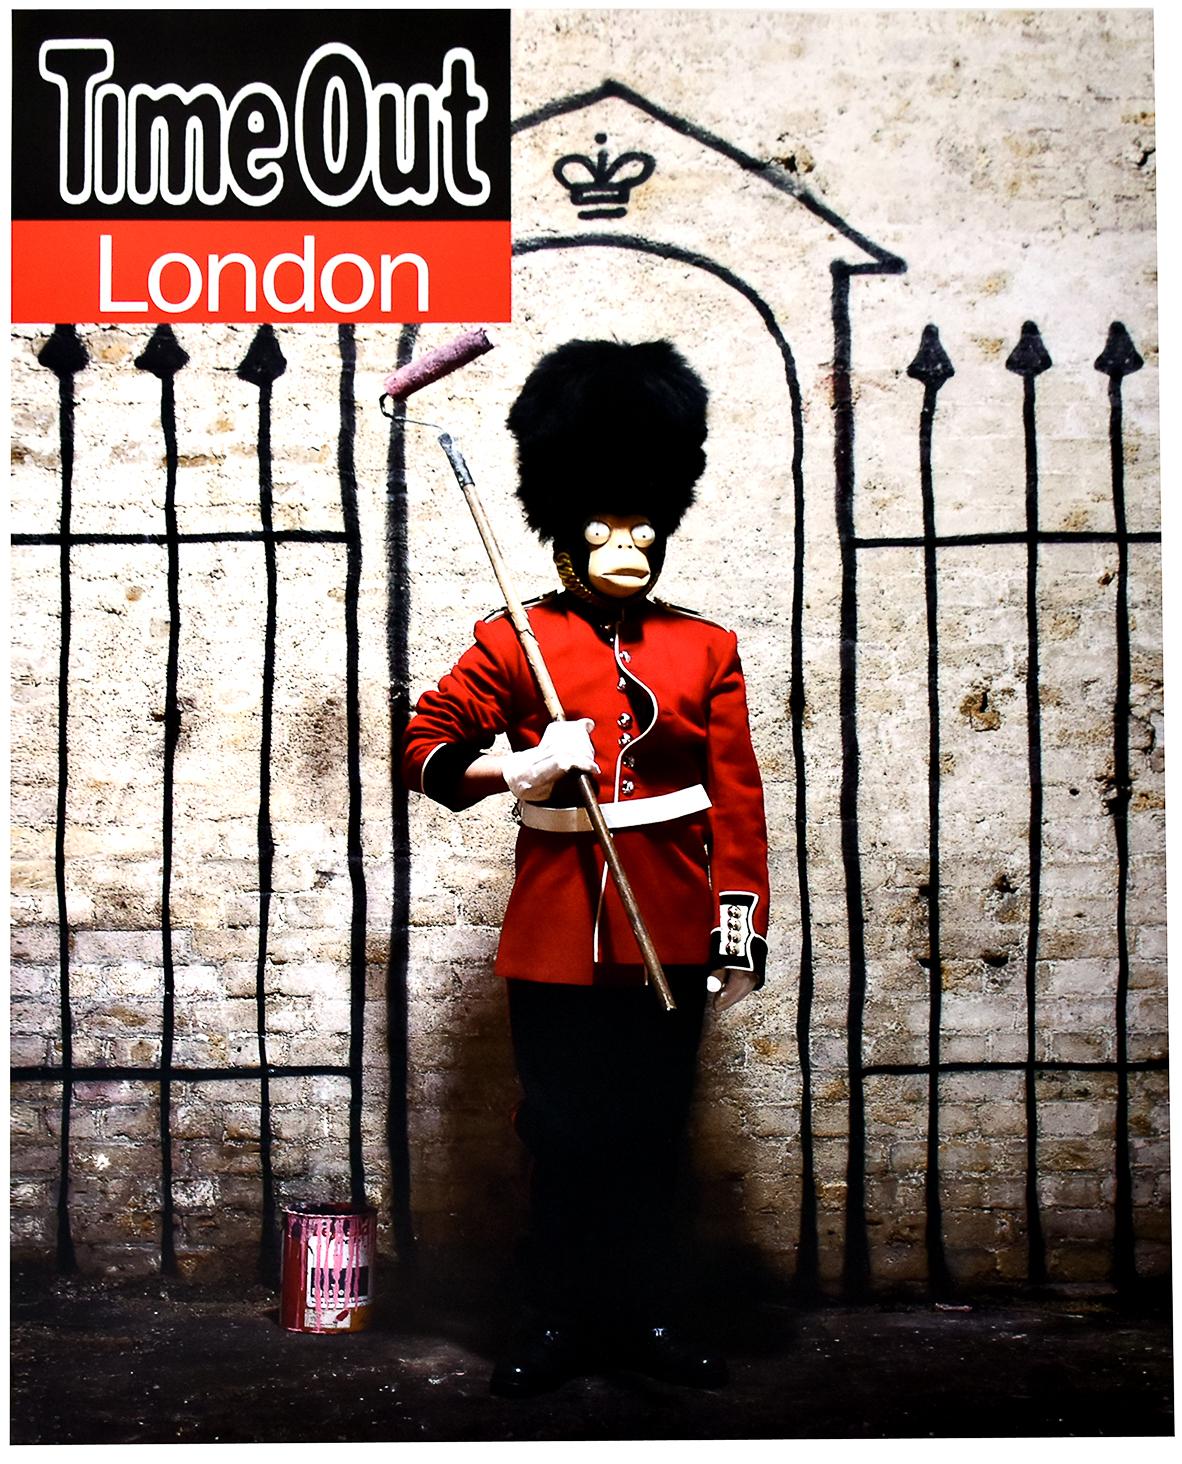 BANKSY Time Out London Poster - Print by Banksy